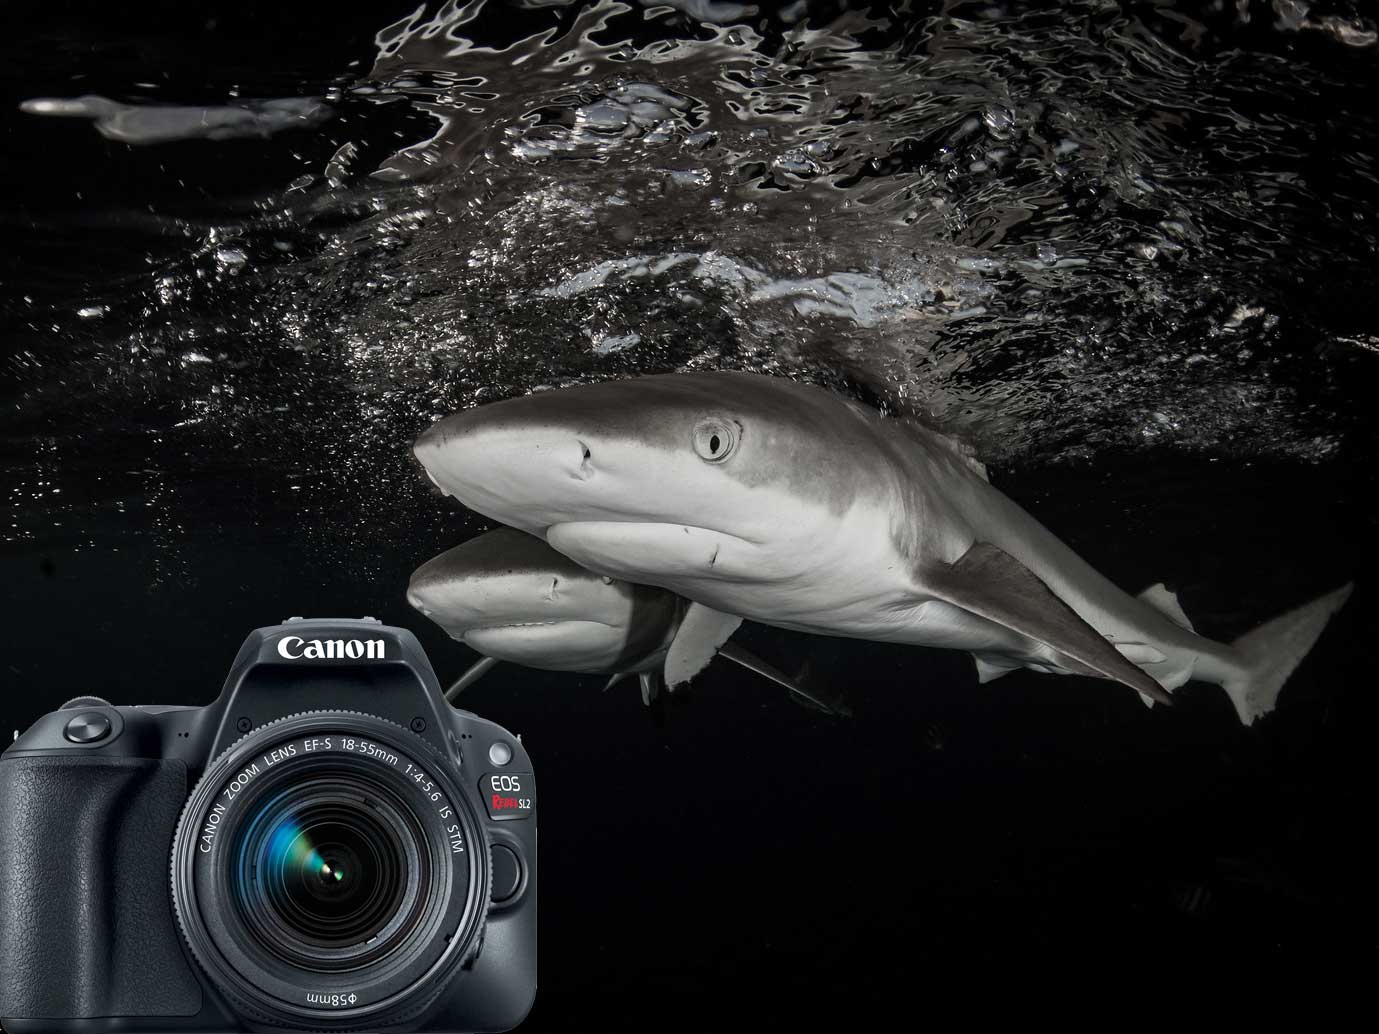 Canon EOS 200D Rebel SL2 Underwater Photos